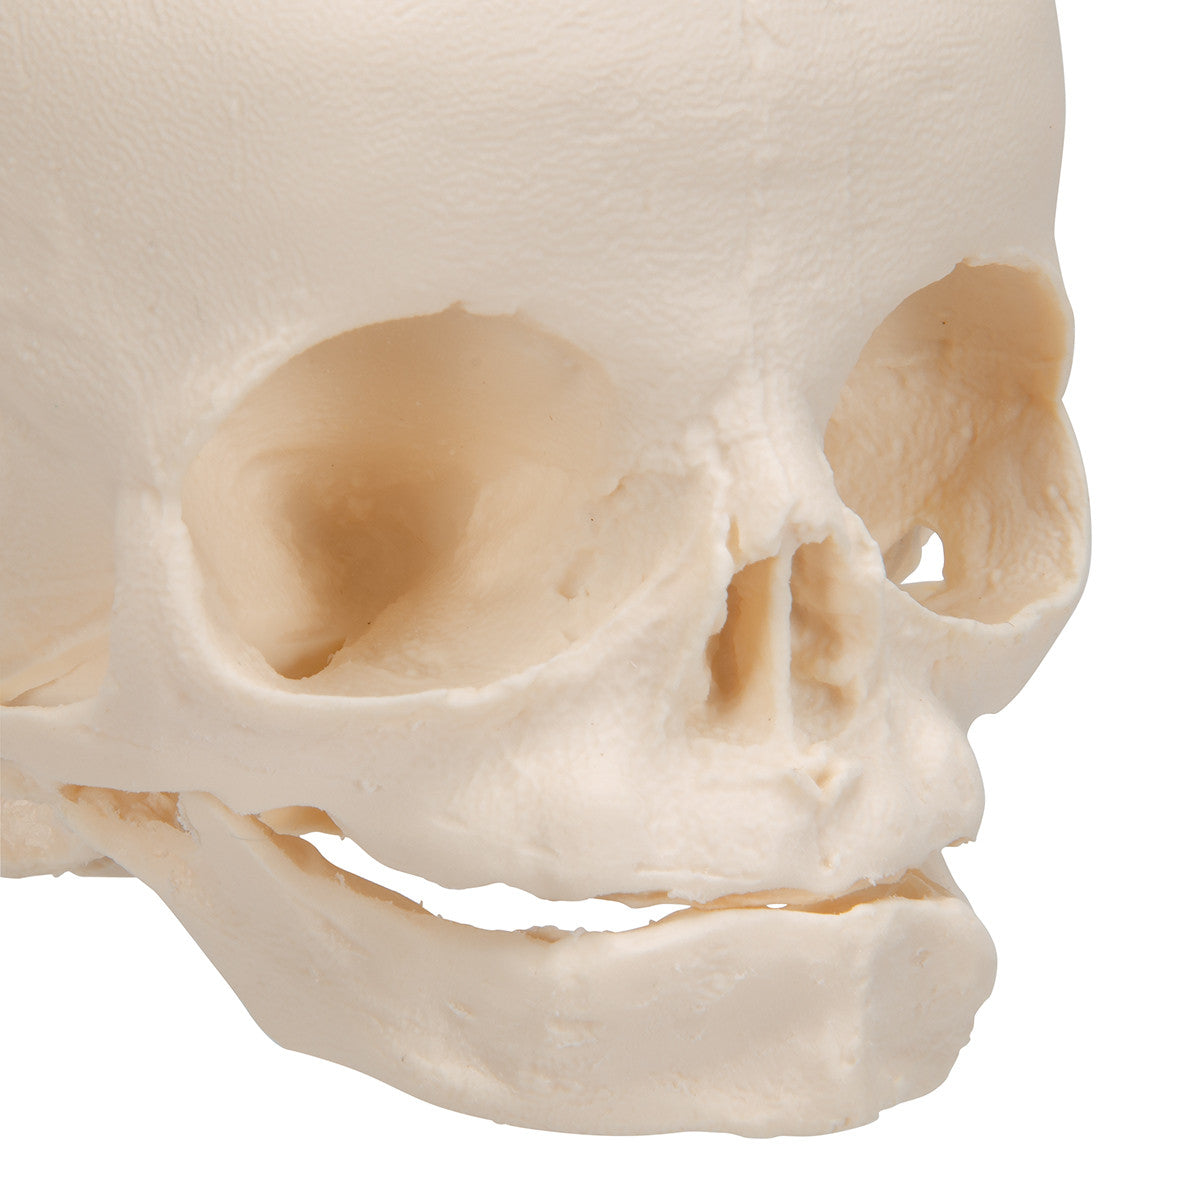 Fetal Skull | 3B Scientific A25